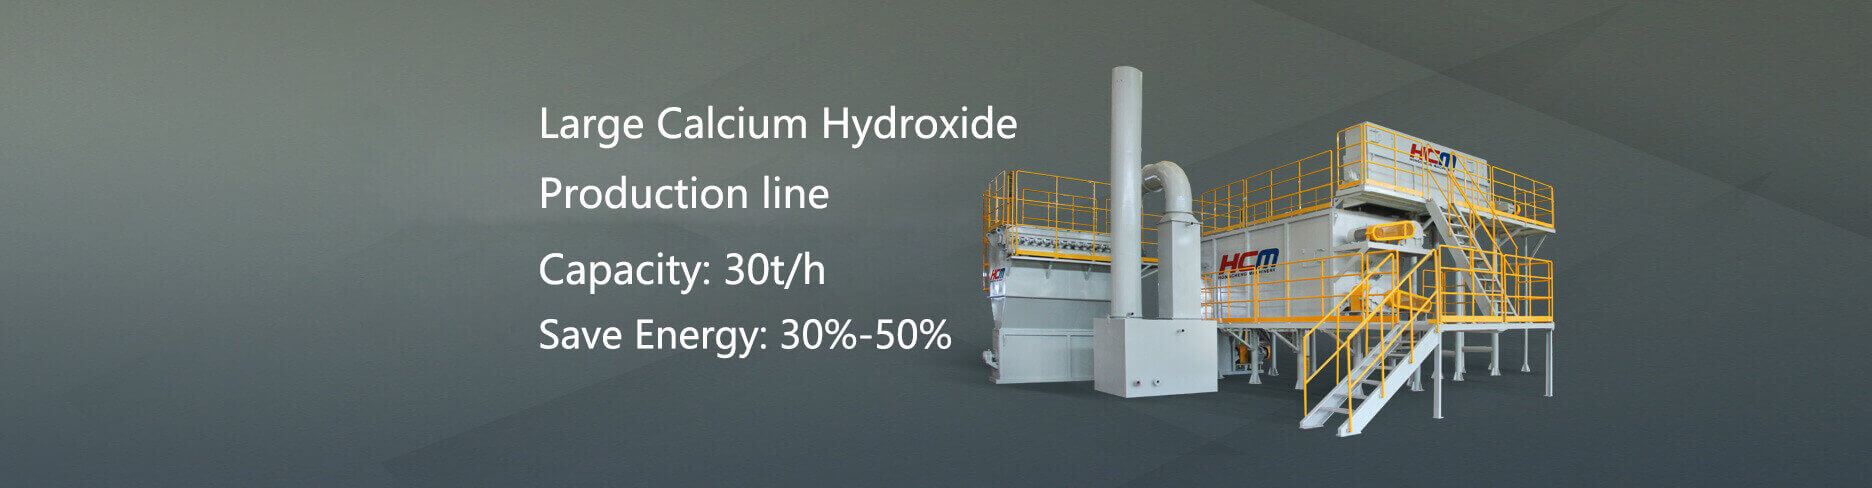 Large calcium hydroxide production line